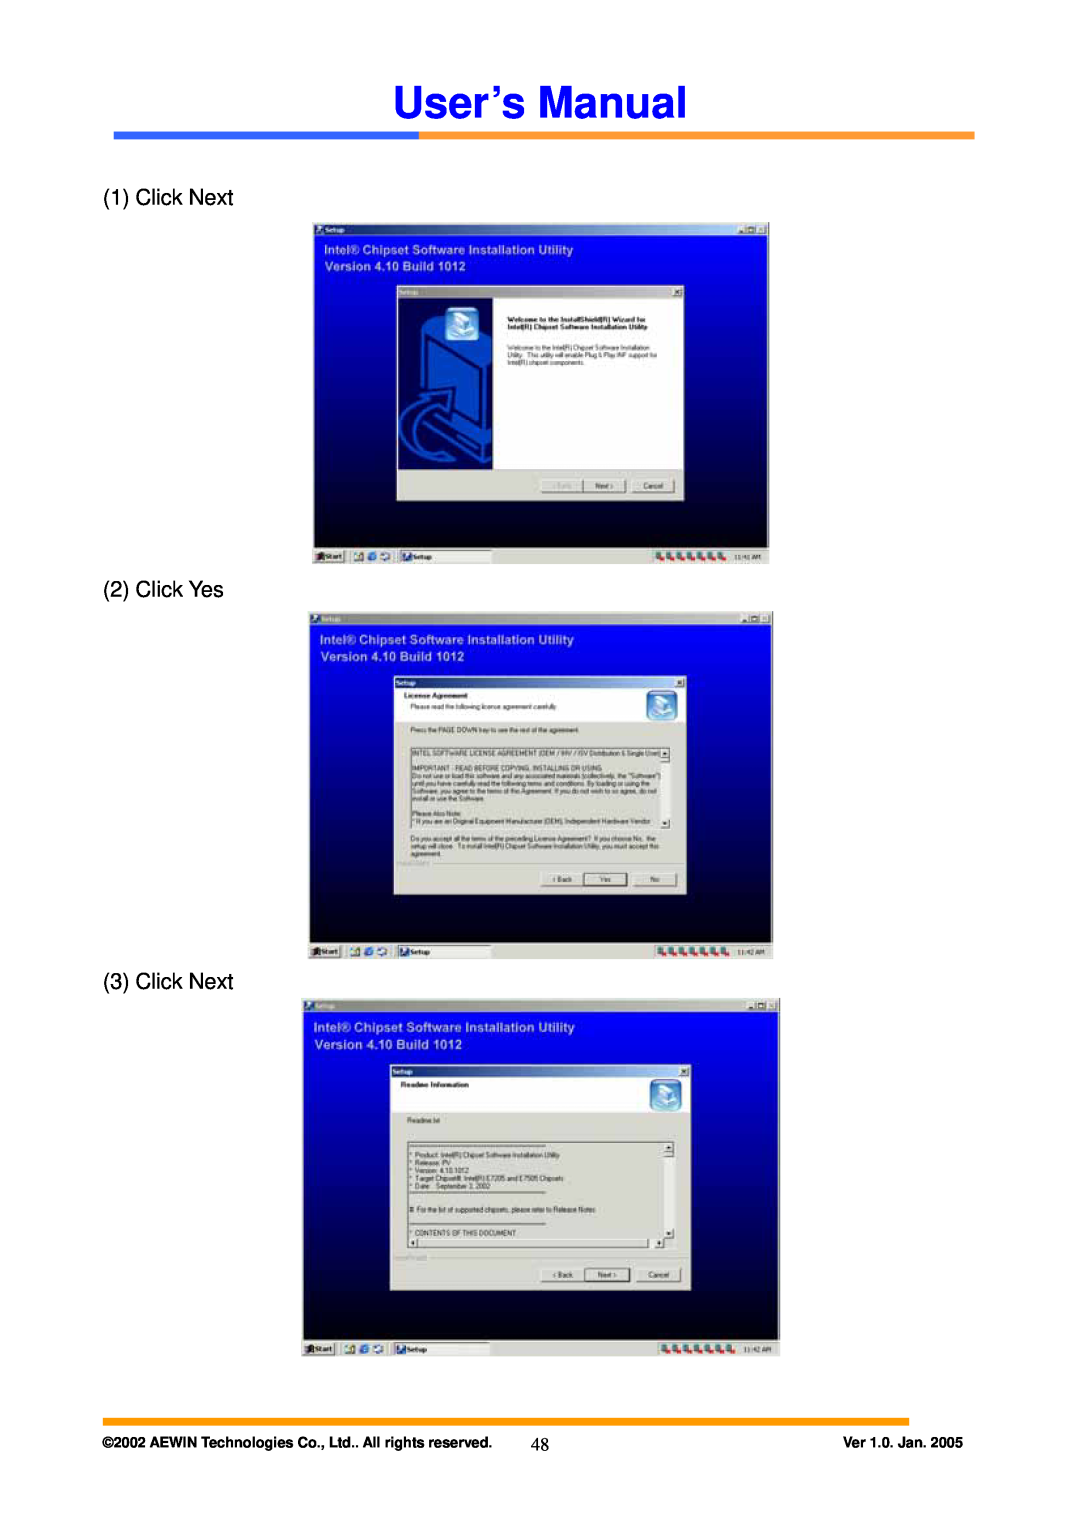 Intel AW-A795 user manual User’s Manual, Click Next 2 Click Yes 3 Click Next, Ver 1.0. Jan 